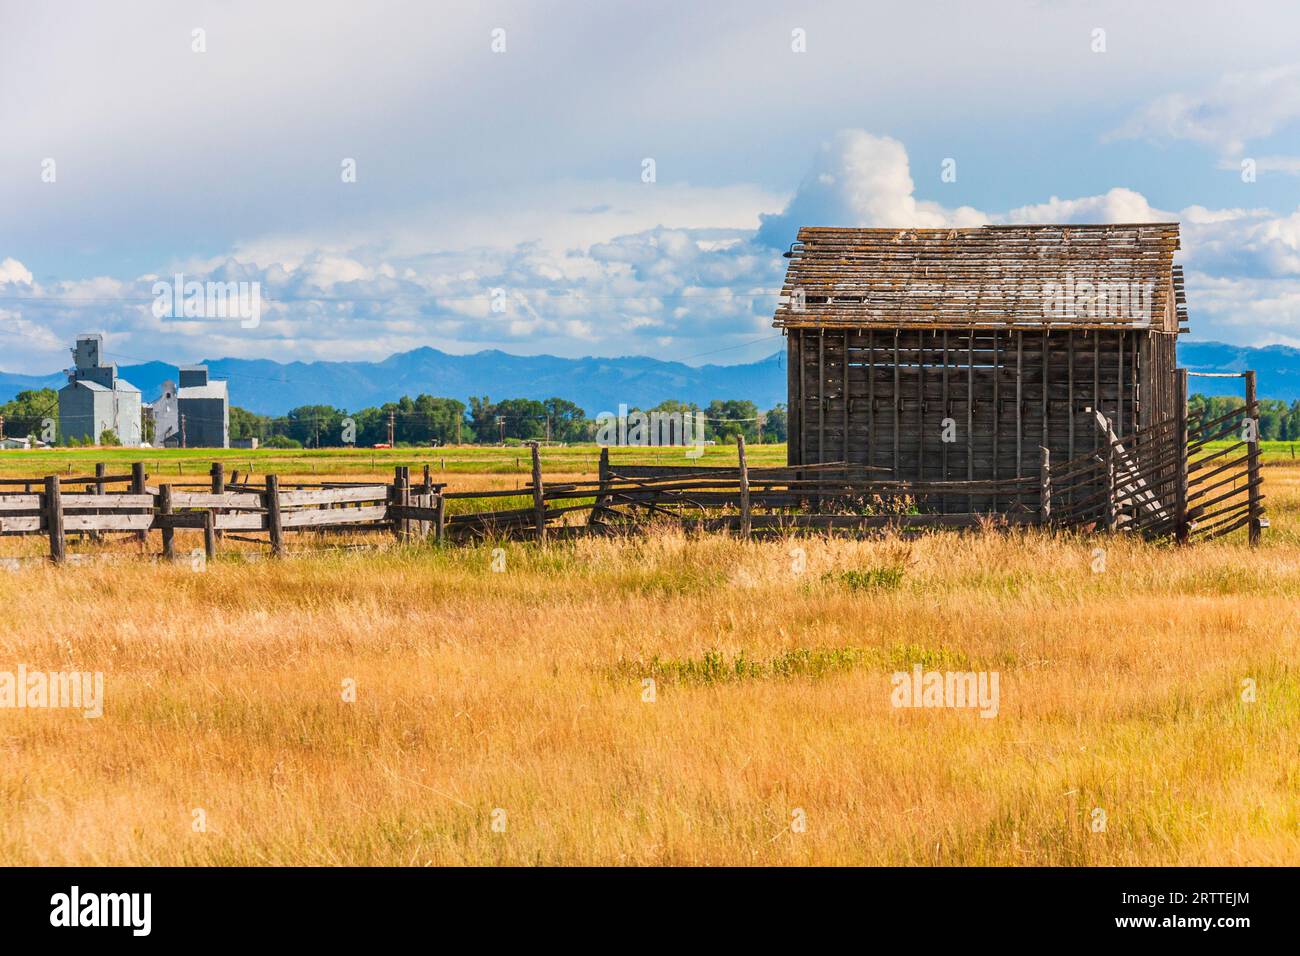 Granero abandonado en Idaho farm en Teton Valley, en el lado occidental de la cordillera Teton. Foto de stock